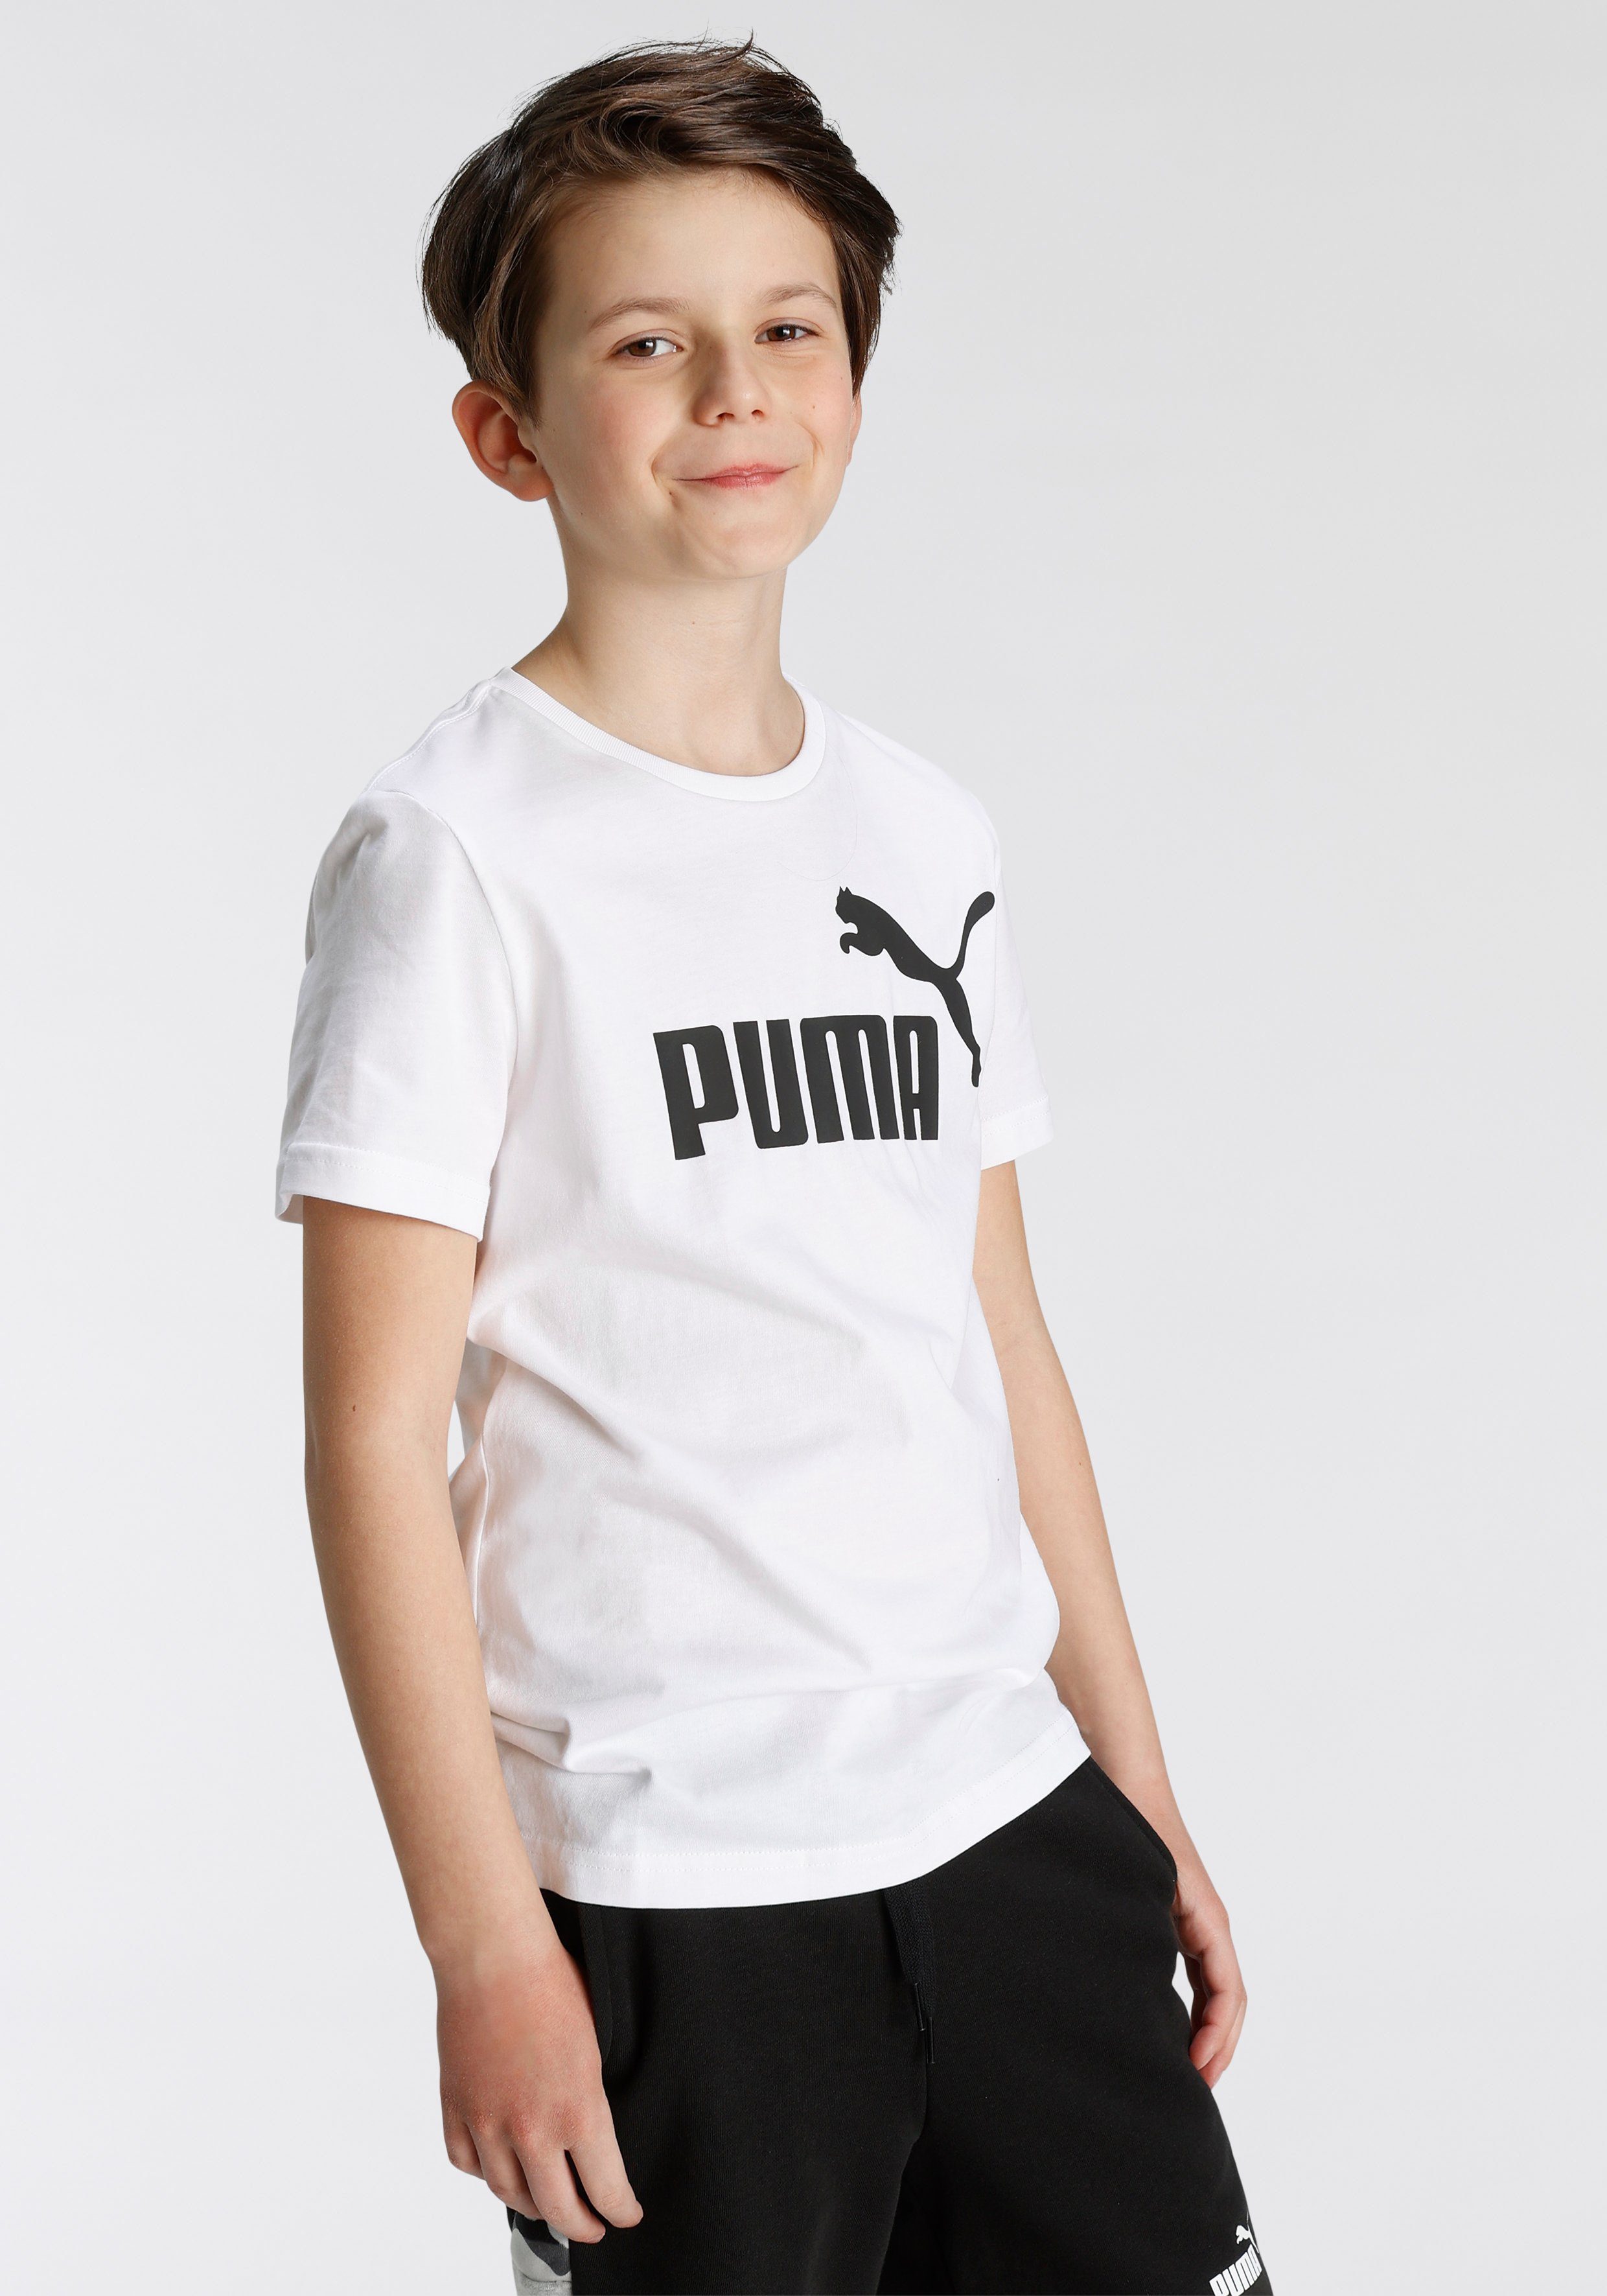 LOGO White T-Shirt Puma TEE PUMA ESS B